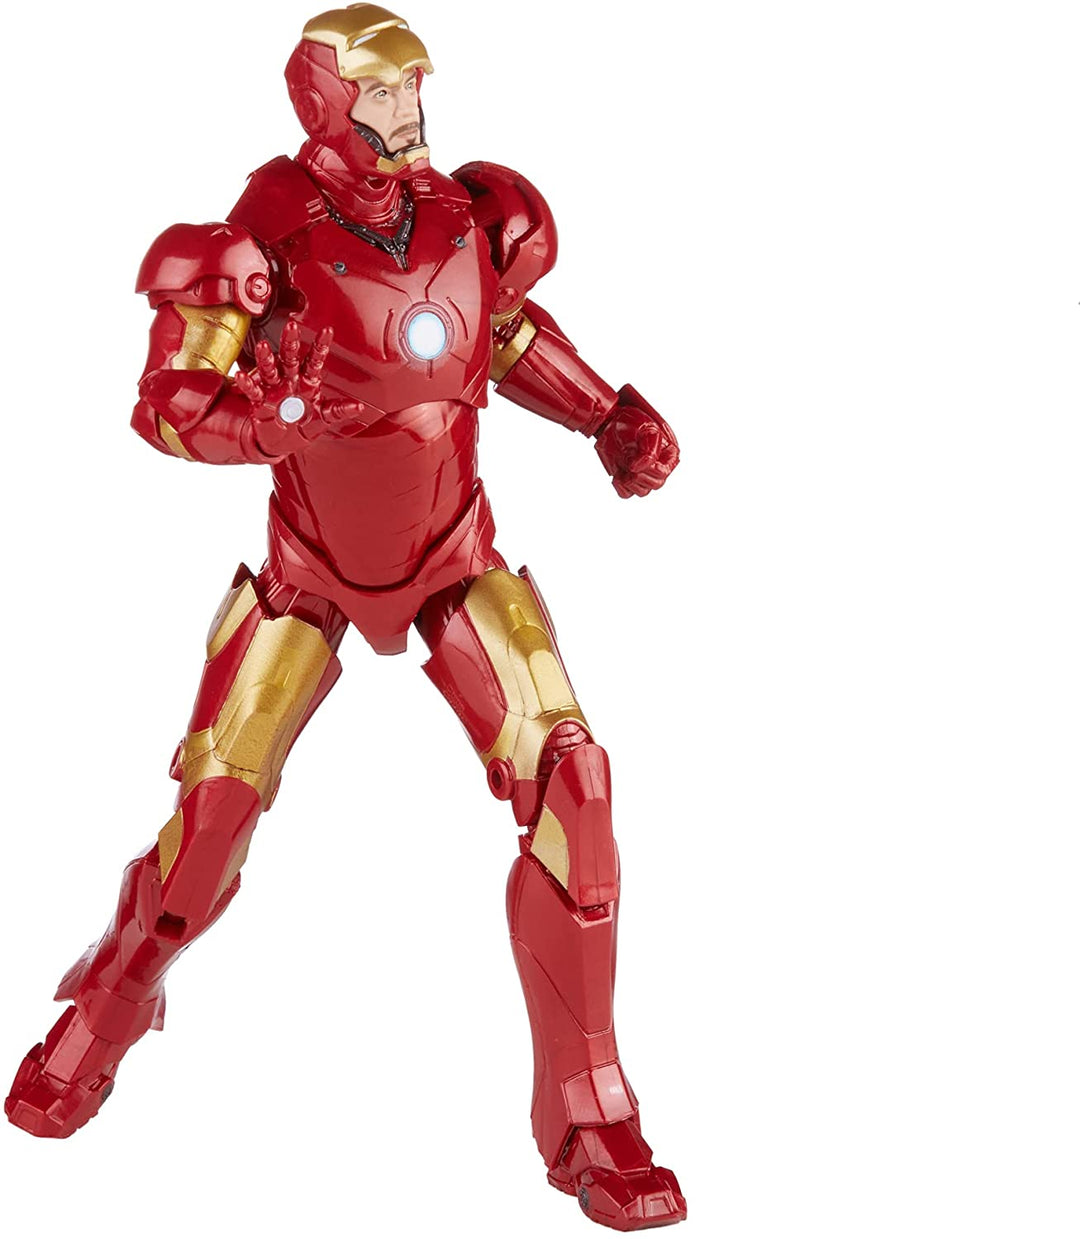 Hasbro Marvel Legends Series 15-cm-scale Action Figure Toy Iron Man Mark 3, Includes Premium Design and 5 Accessories